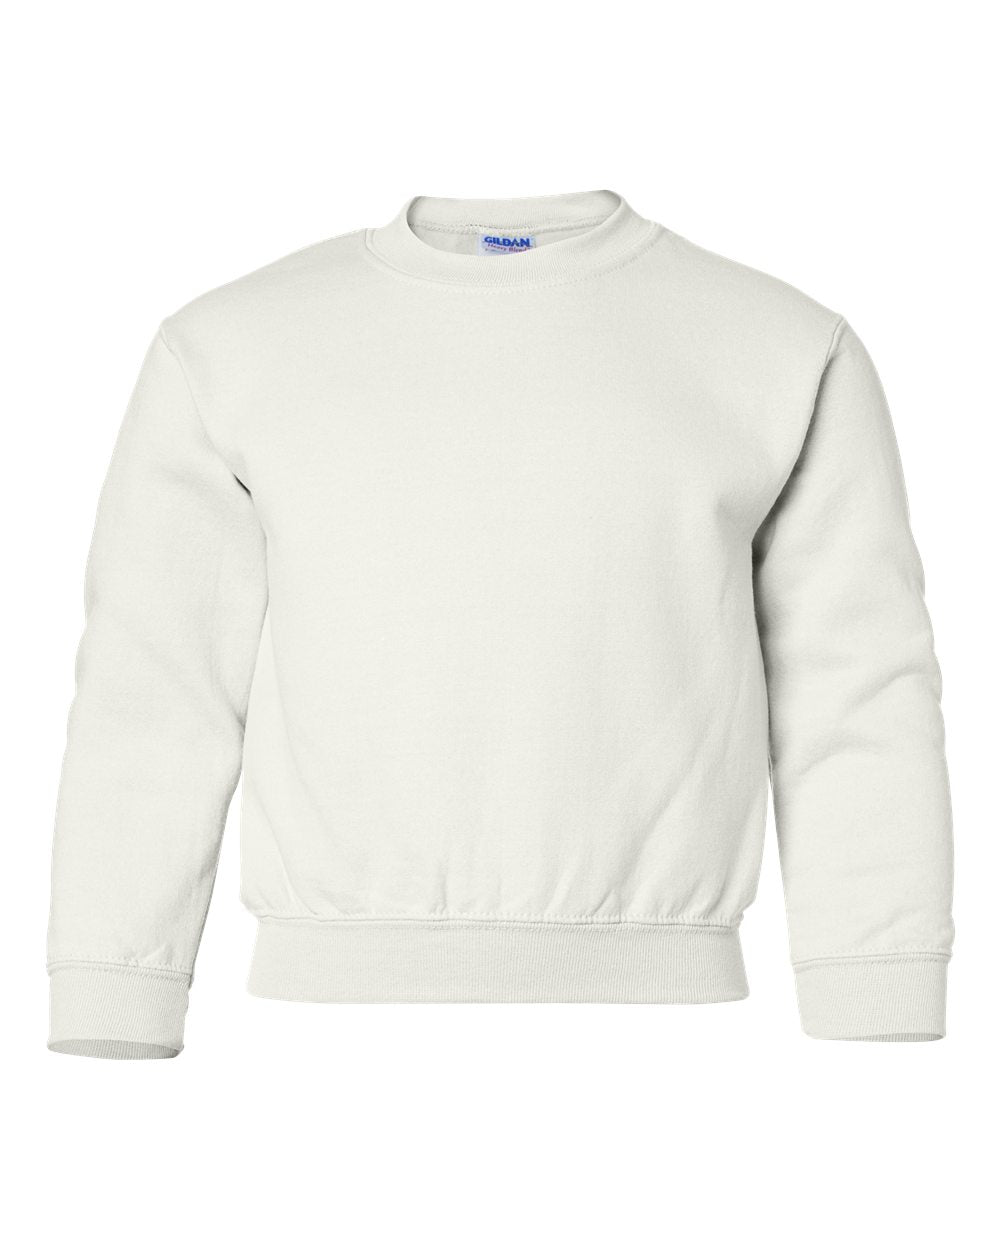 Gildan Youth Crewneck Sweatshirt (18000b) in White